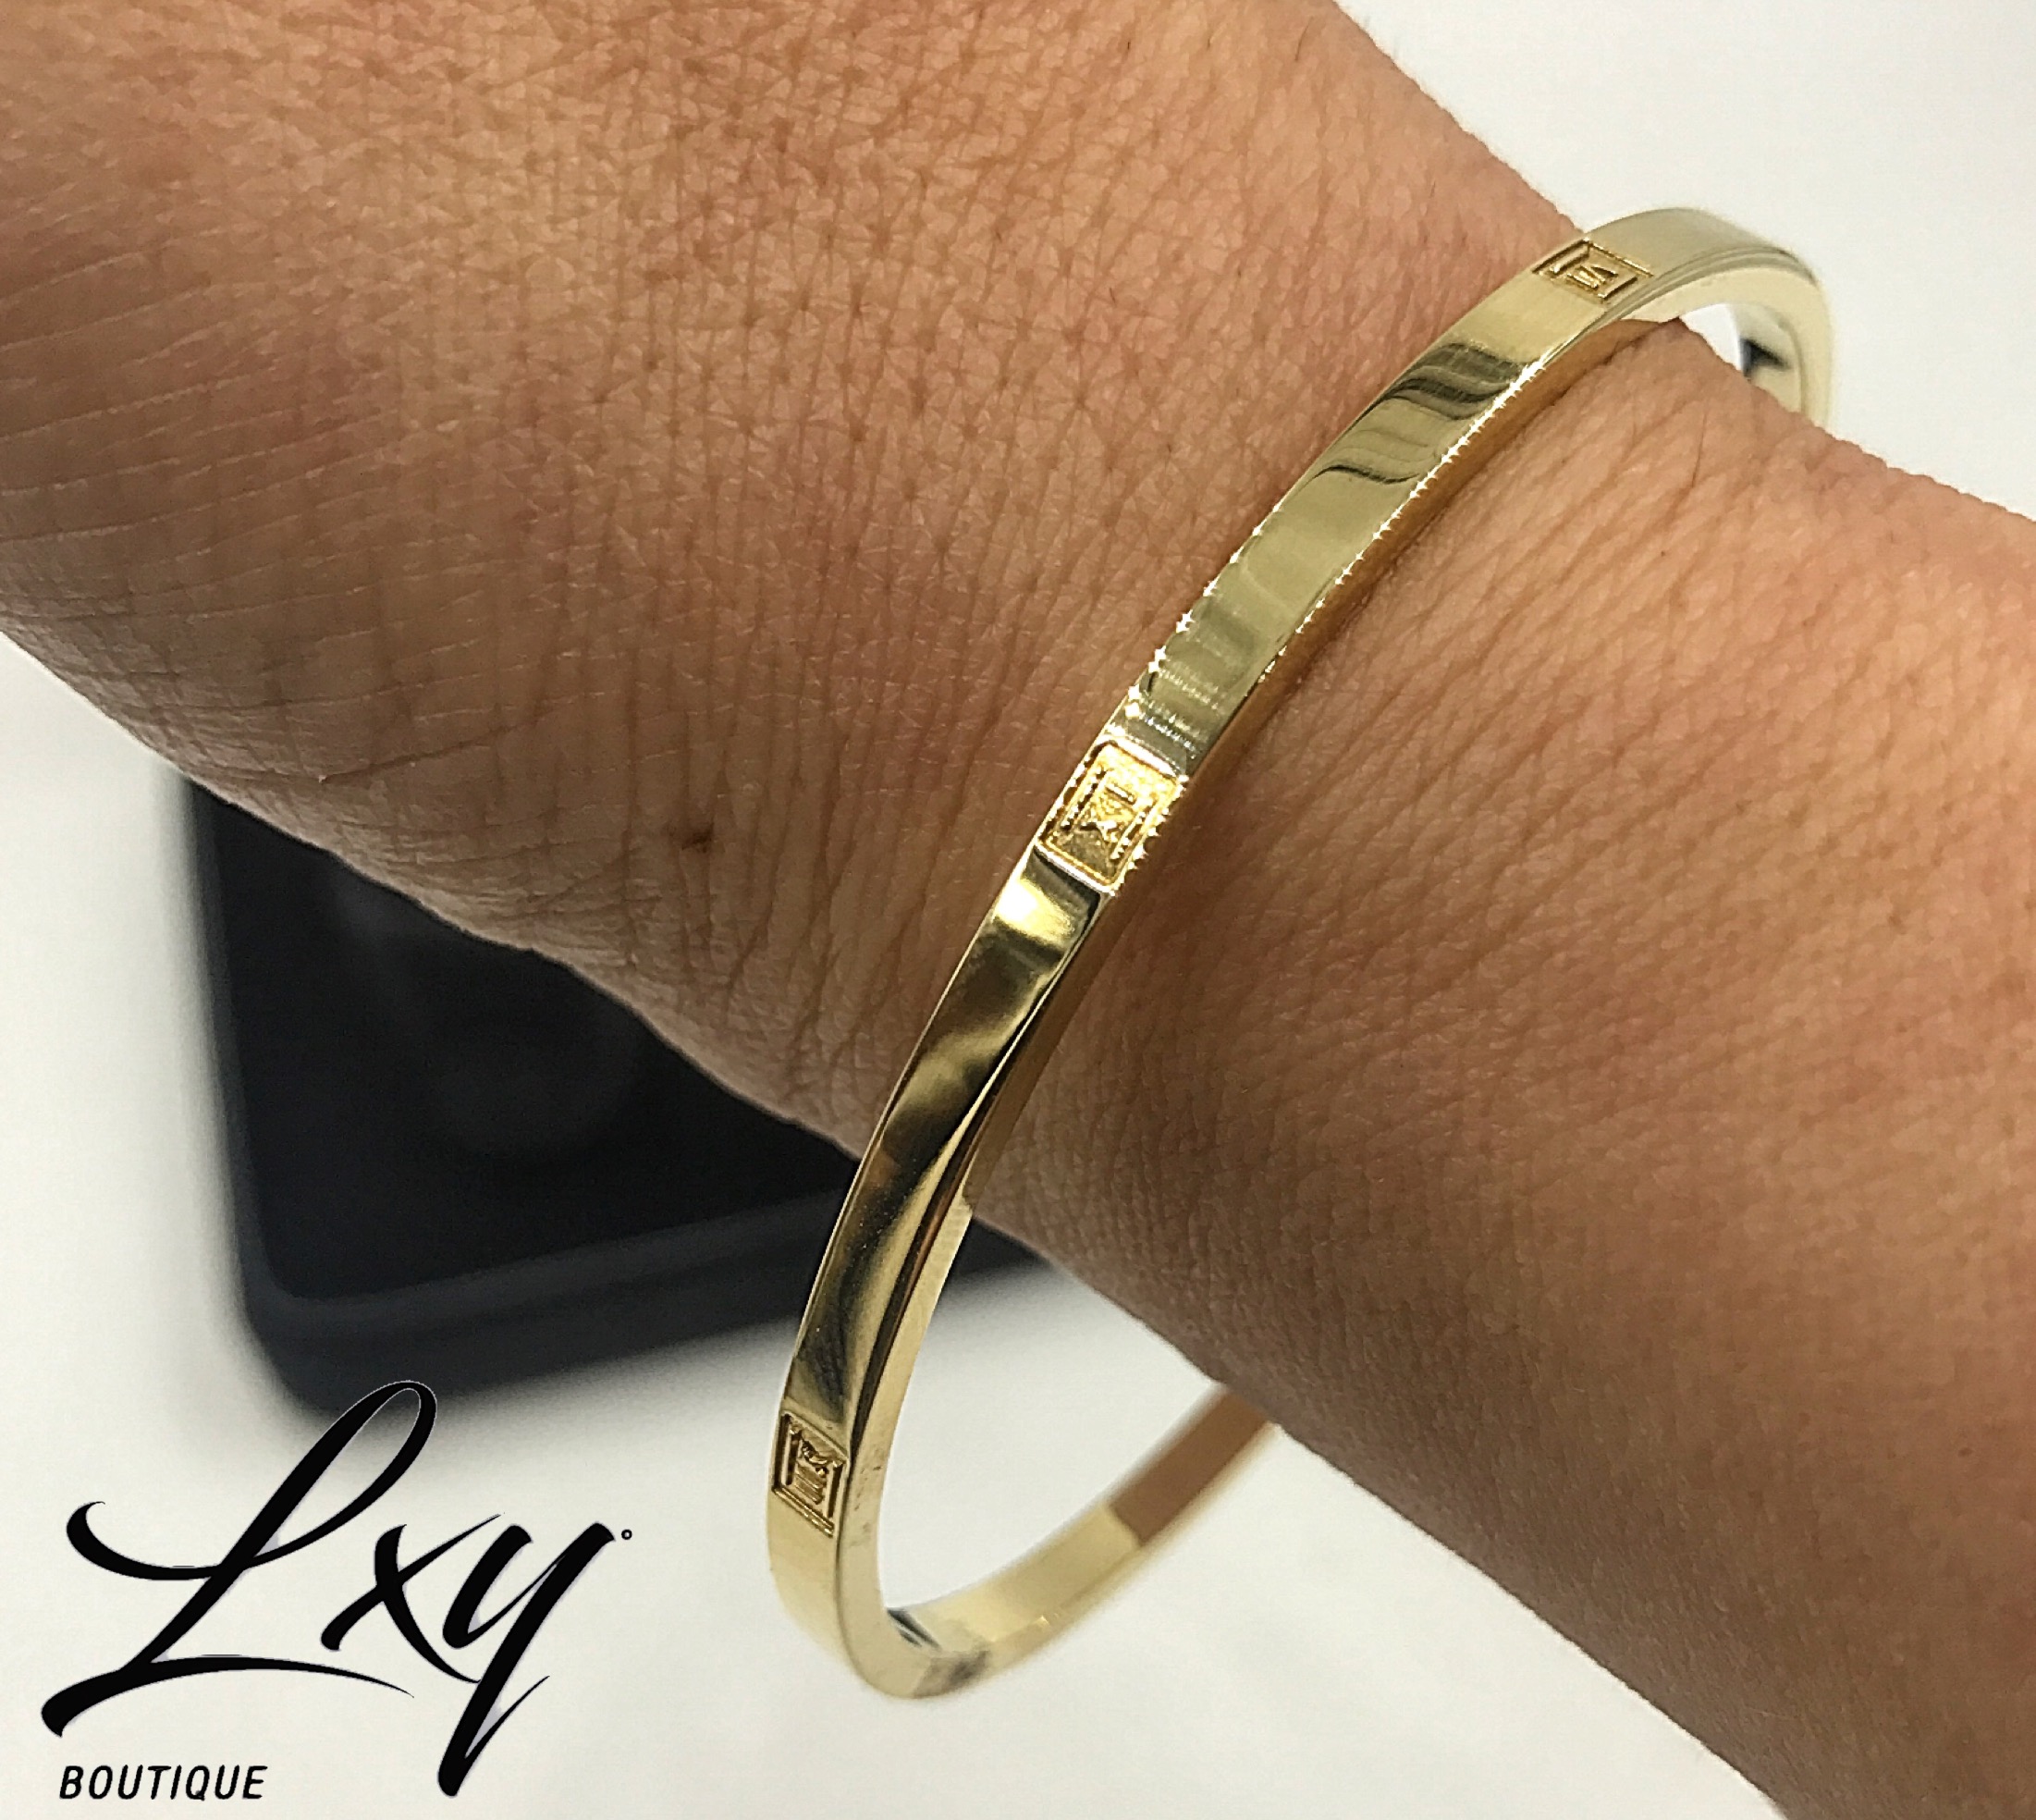 Bracelet and bangle with golden Roman numeral design3 pieces – L